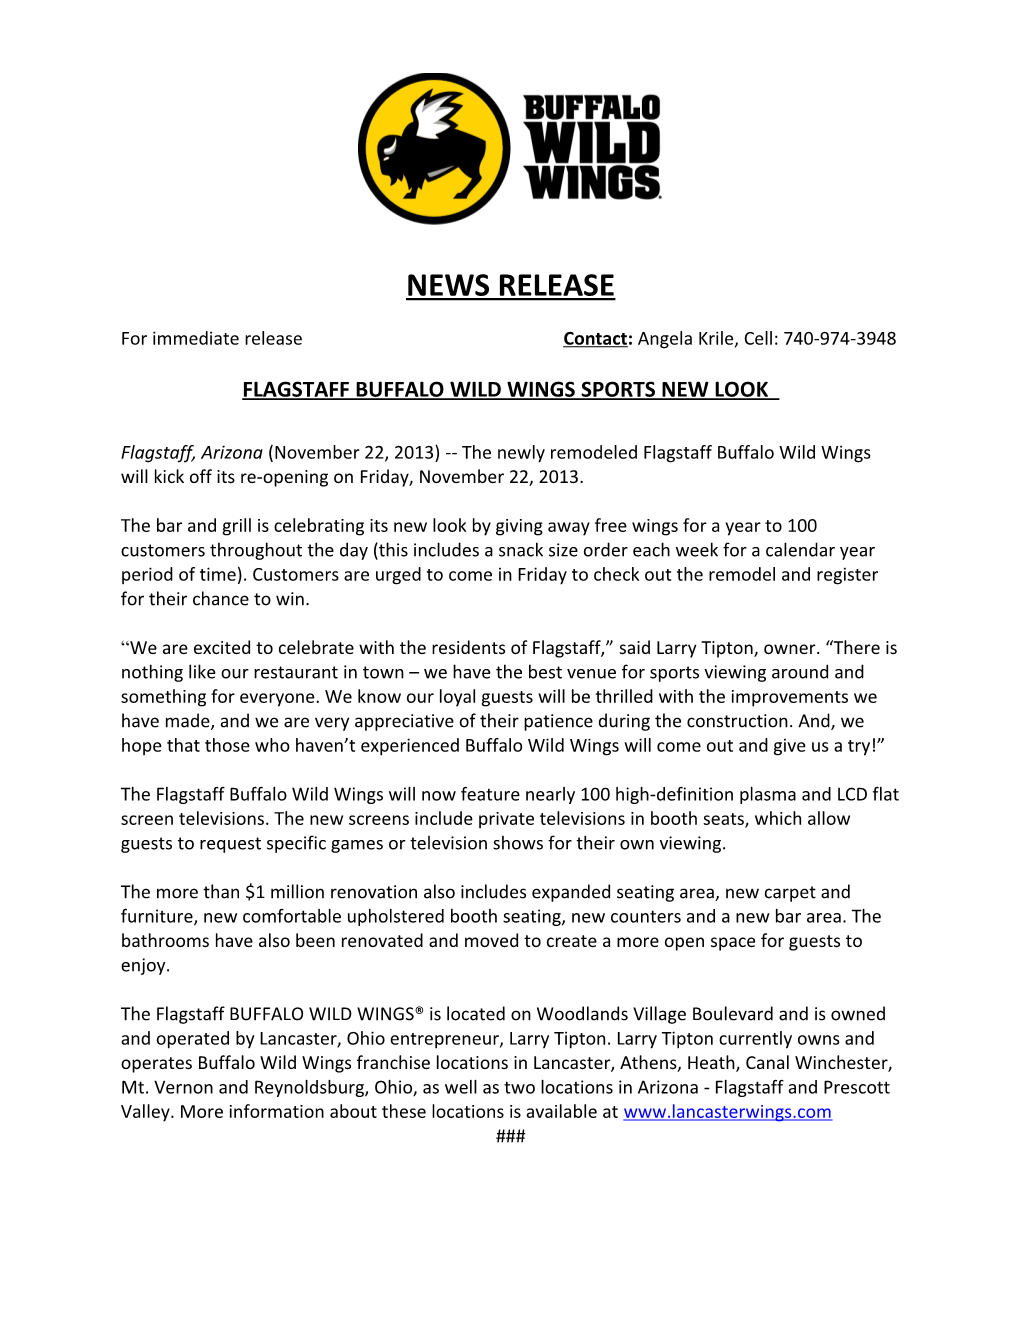 Flagstaff Buffalo Wild Wings Sports New Look